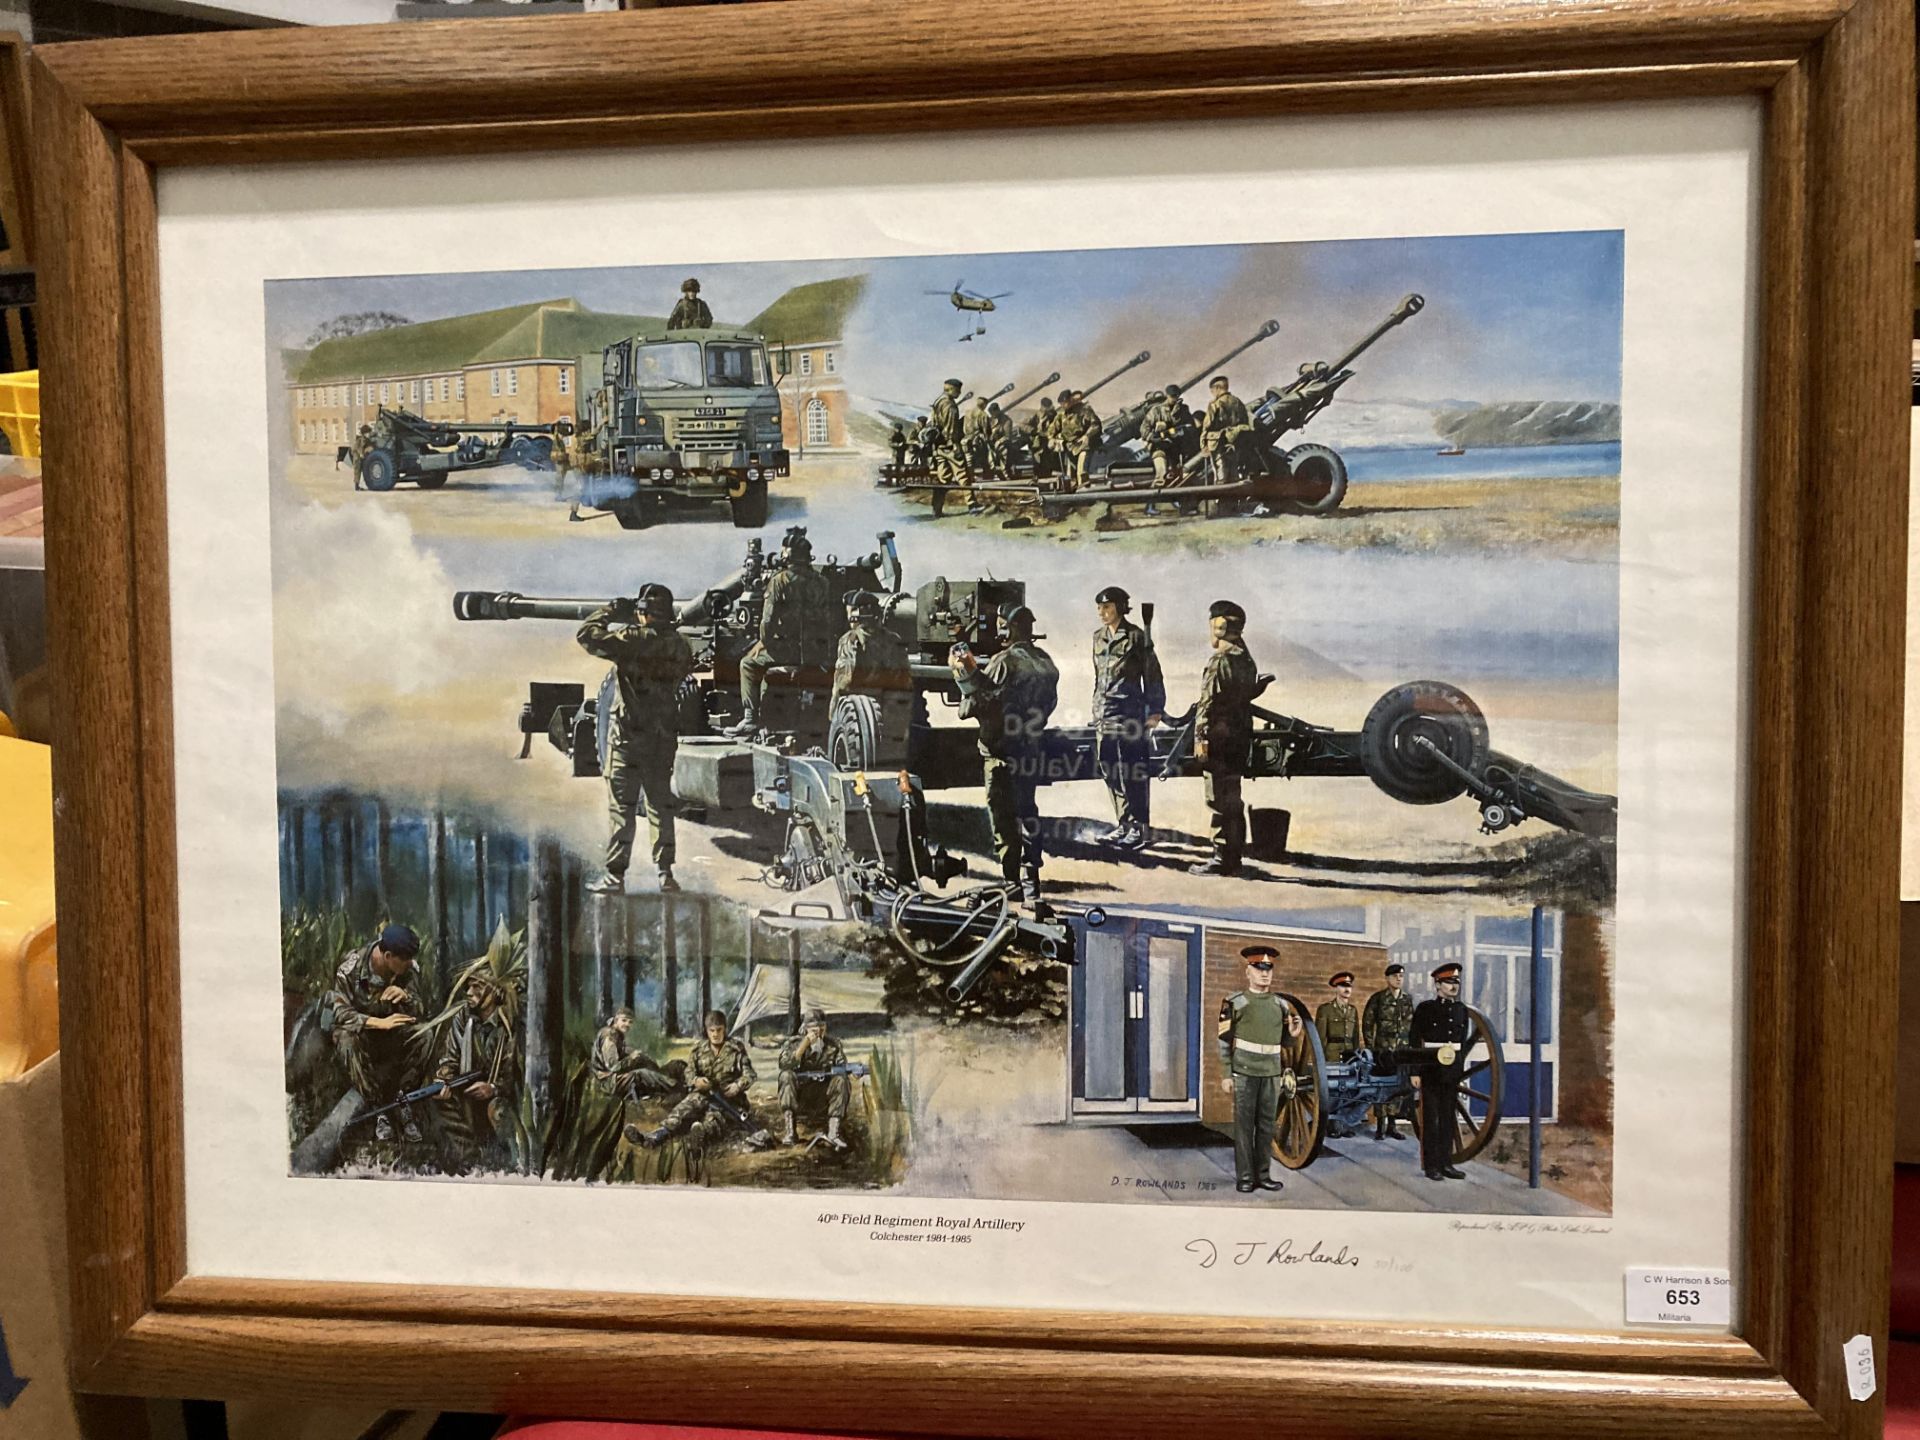 D J Rowlands 1985 framed limited edition print '40th Field Regiment Royal Artillery - Colchester